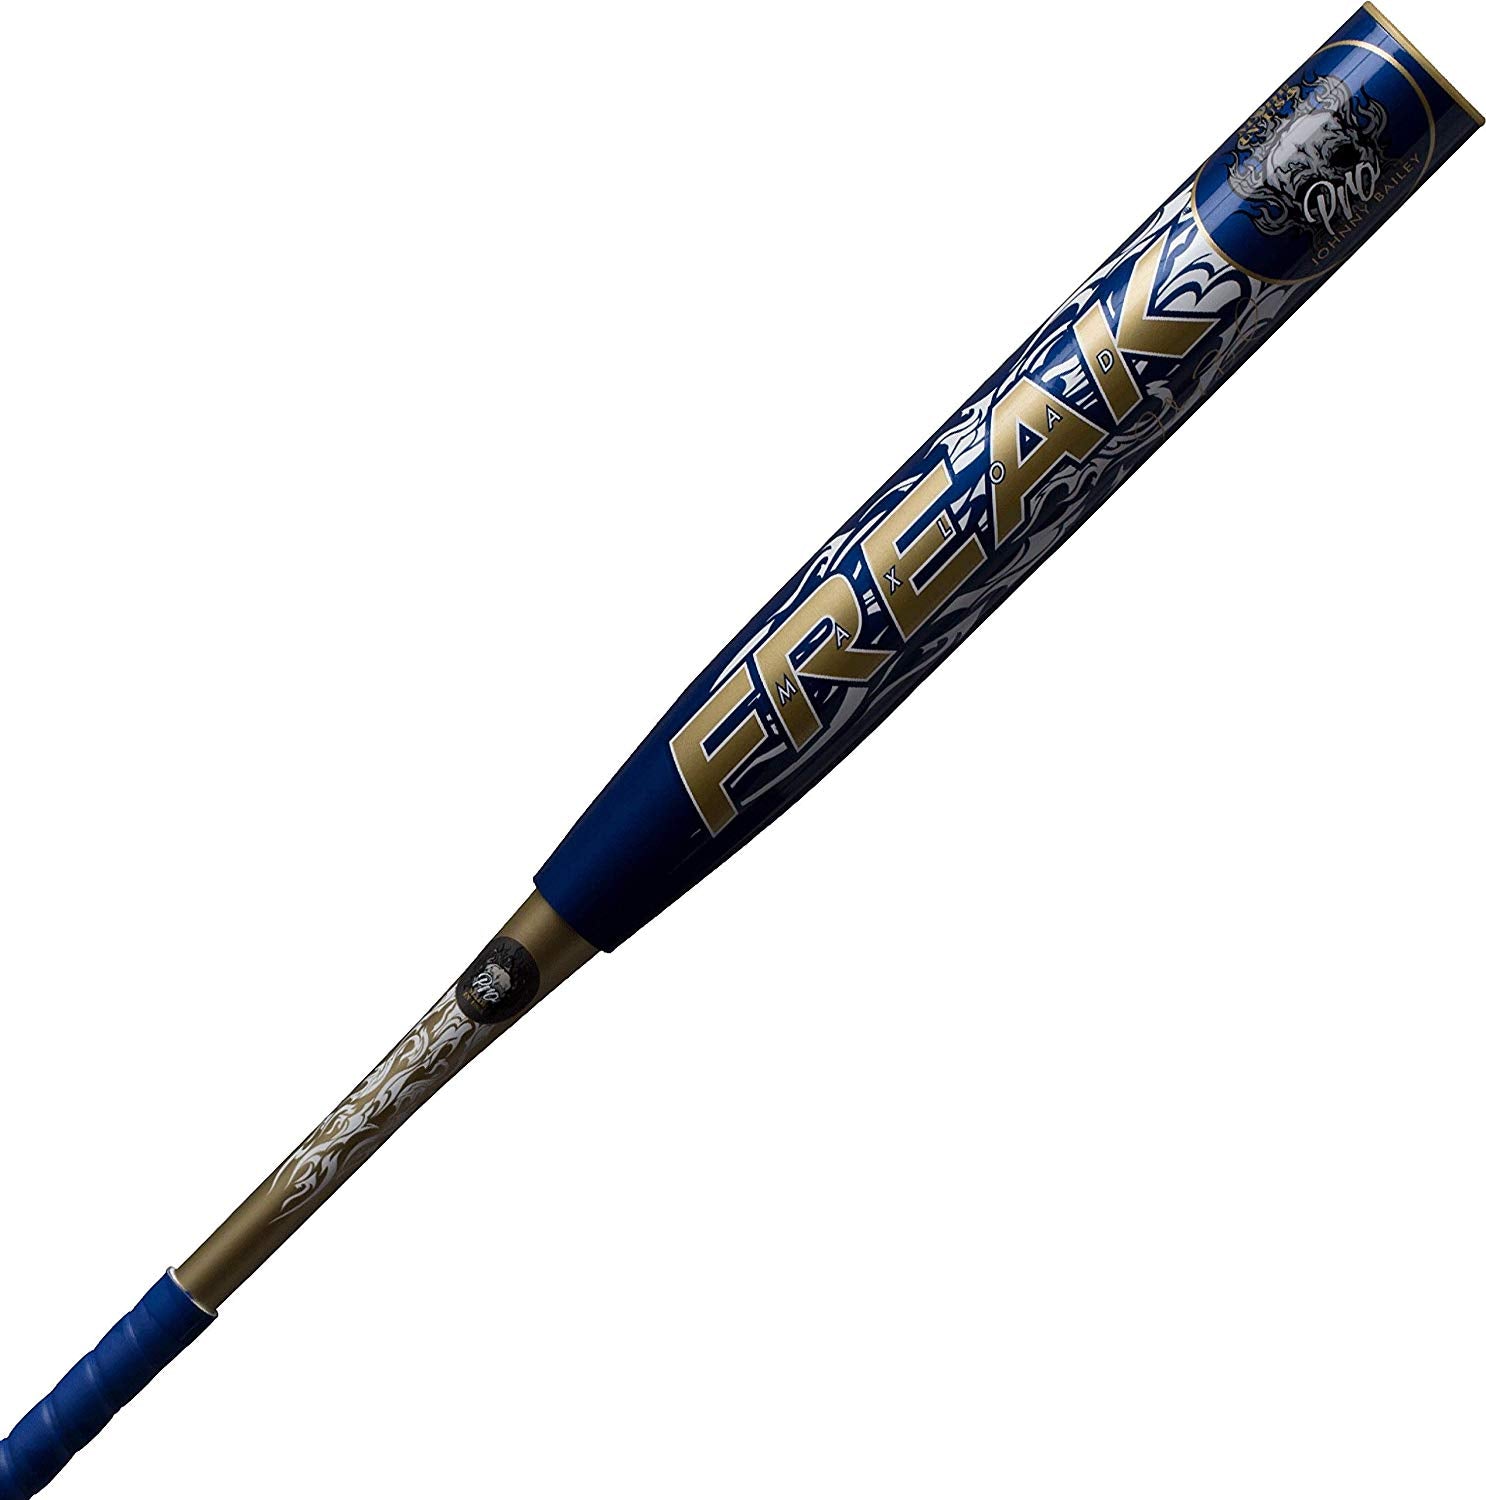 New Miken 2019 Freak Pro Maxload SSUSA Slow Pitch Softball Bat Blue/Gold